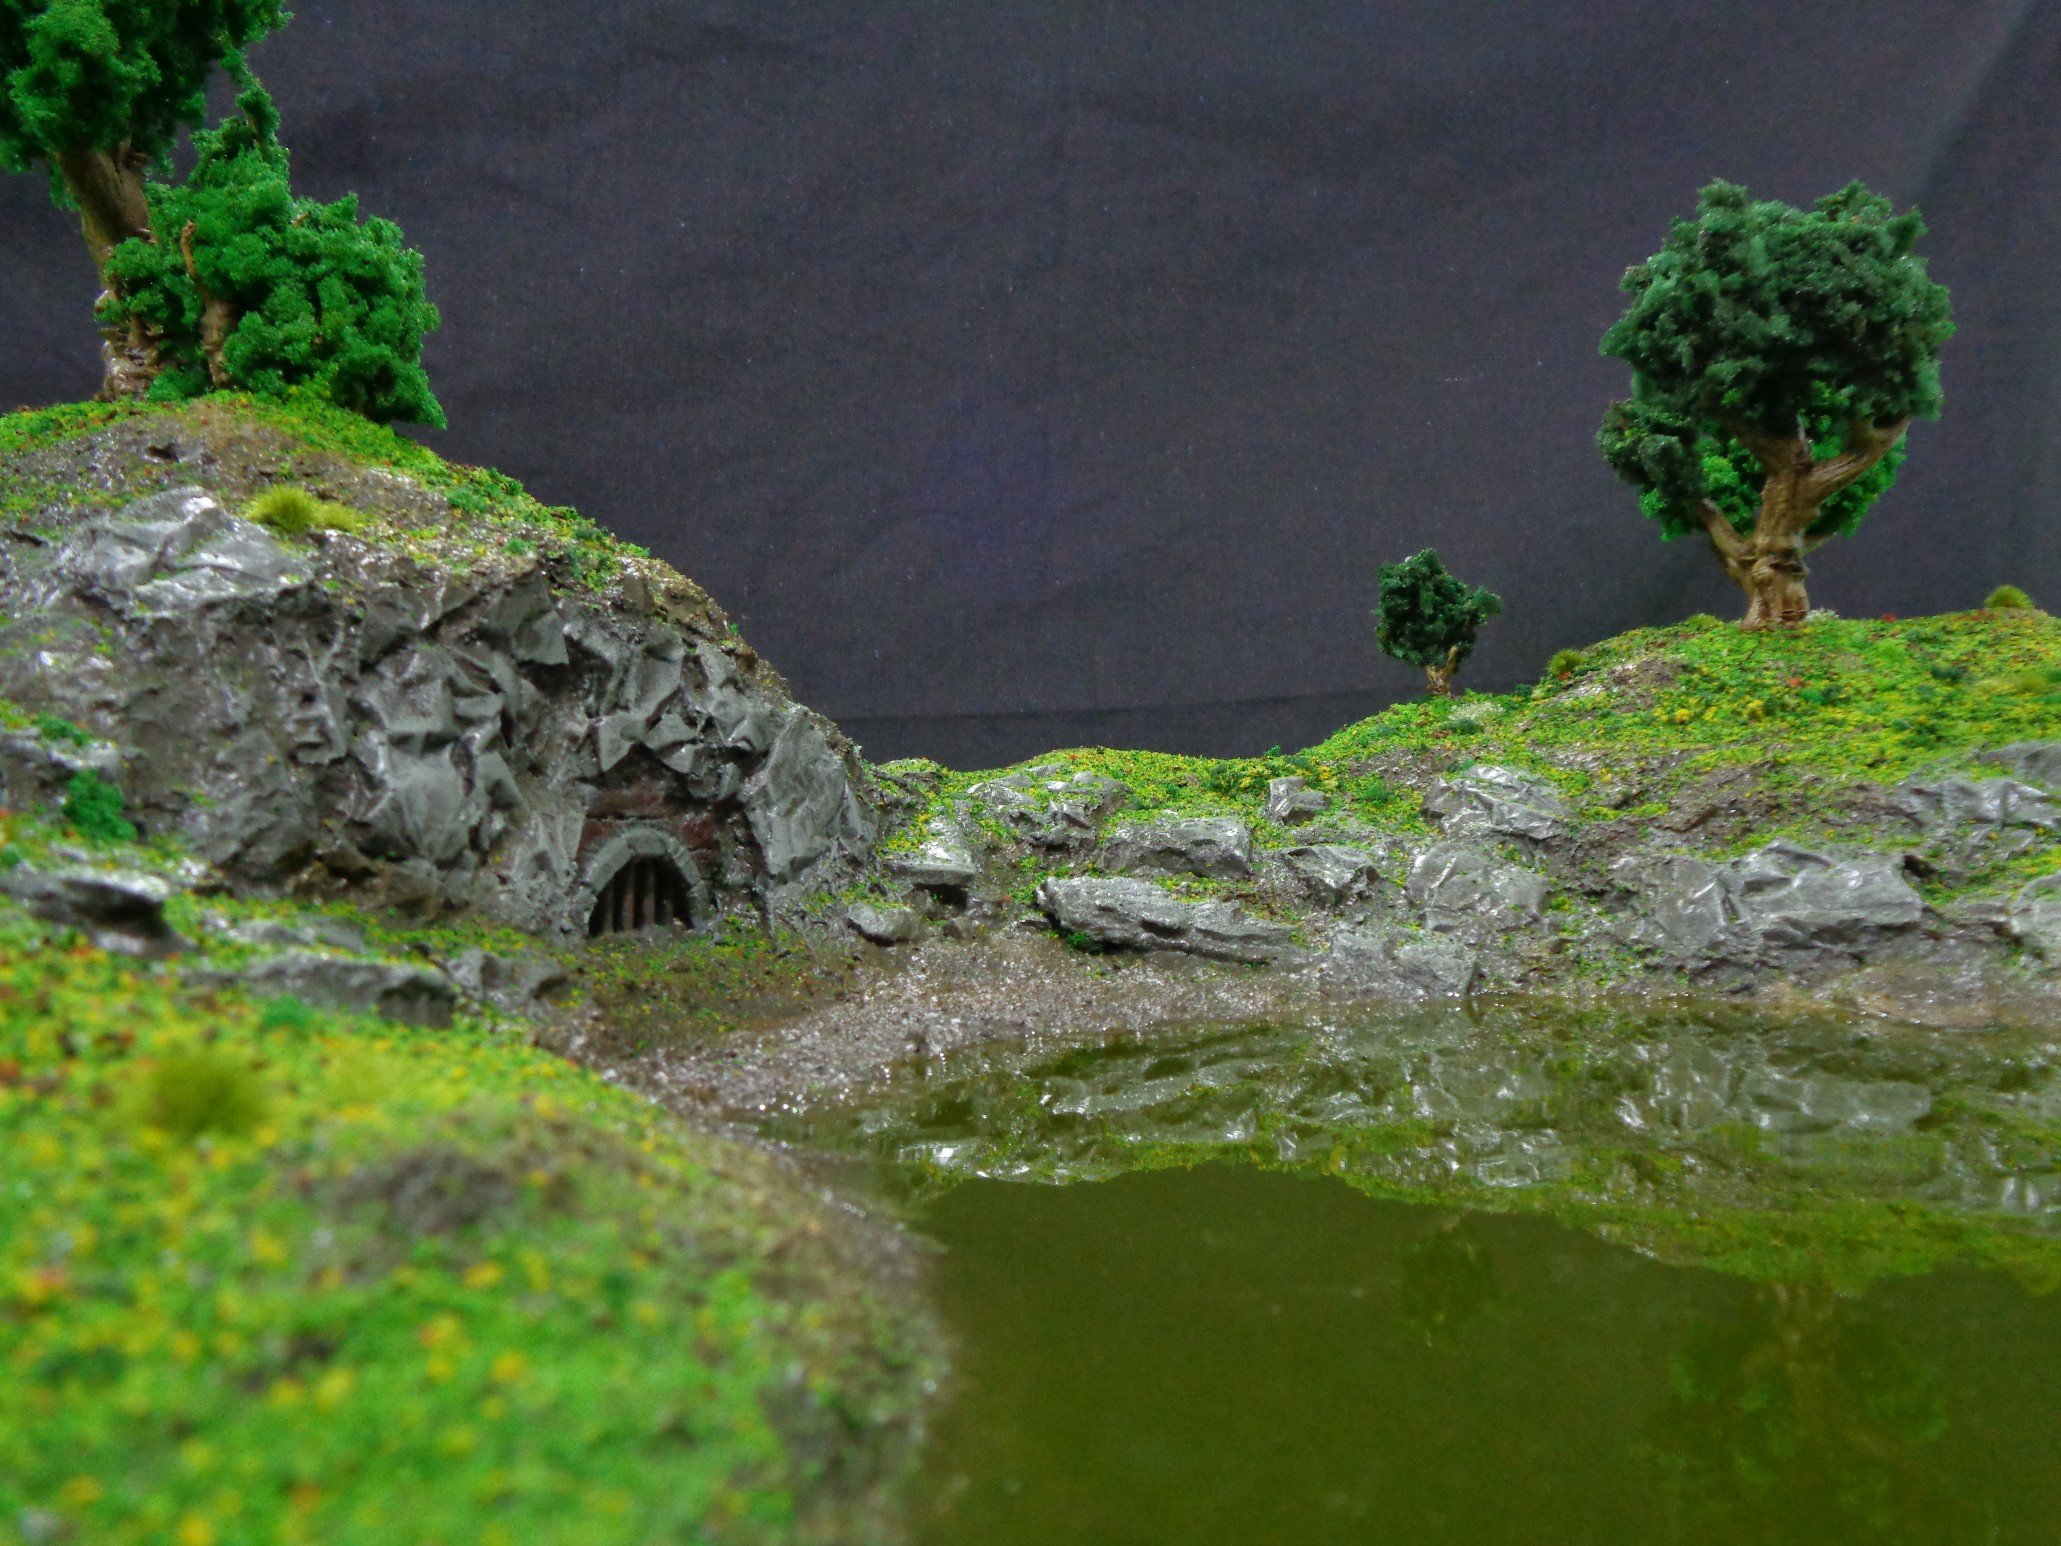 Terrain, Scenery, Bases and Boards - buy from Fox Miniature Diaramas